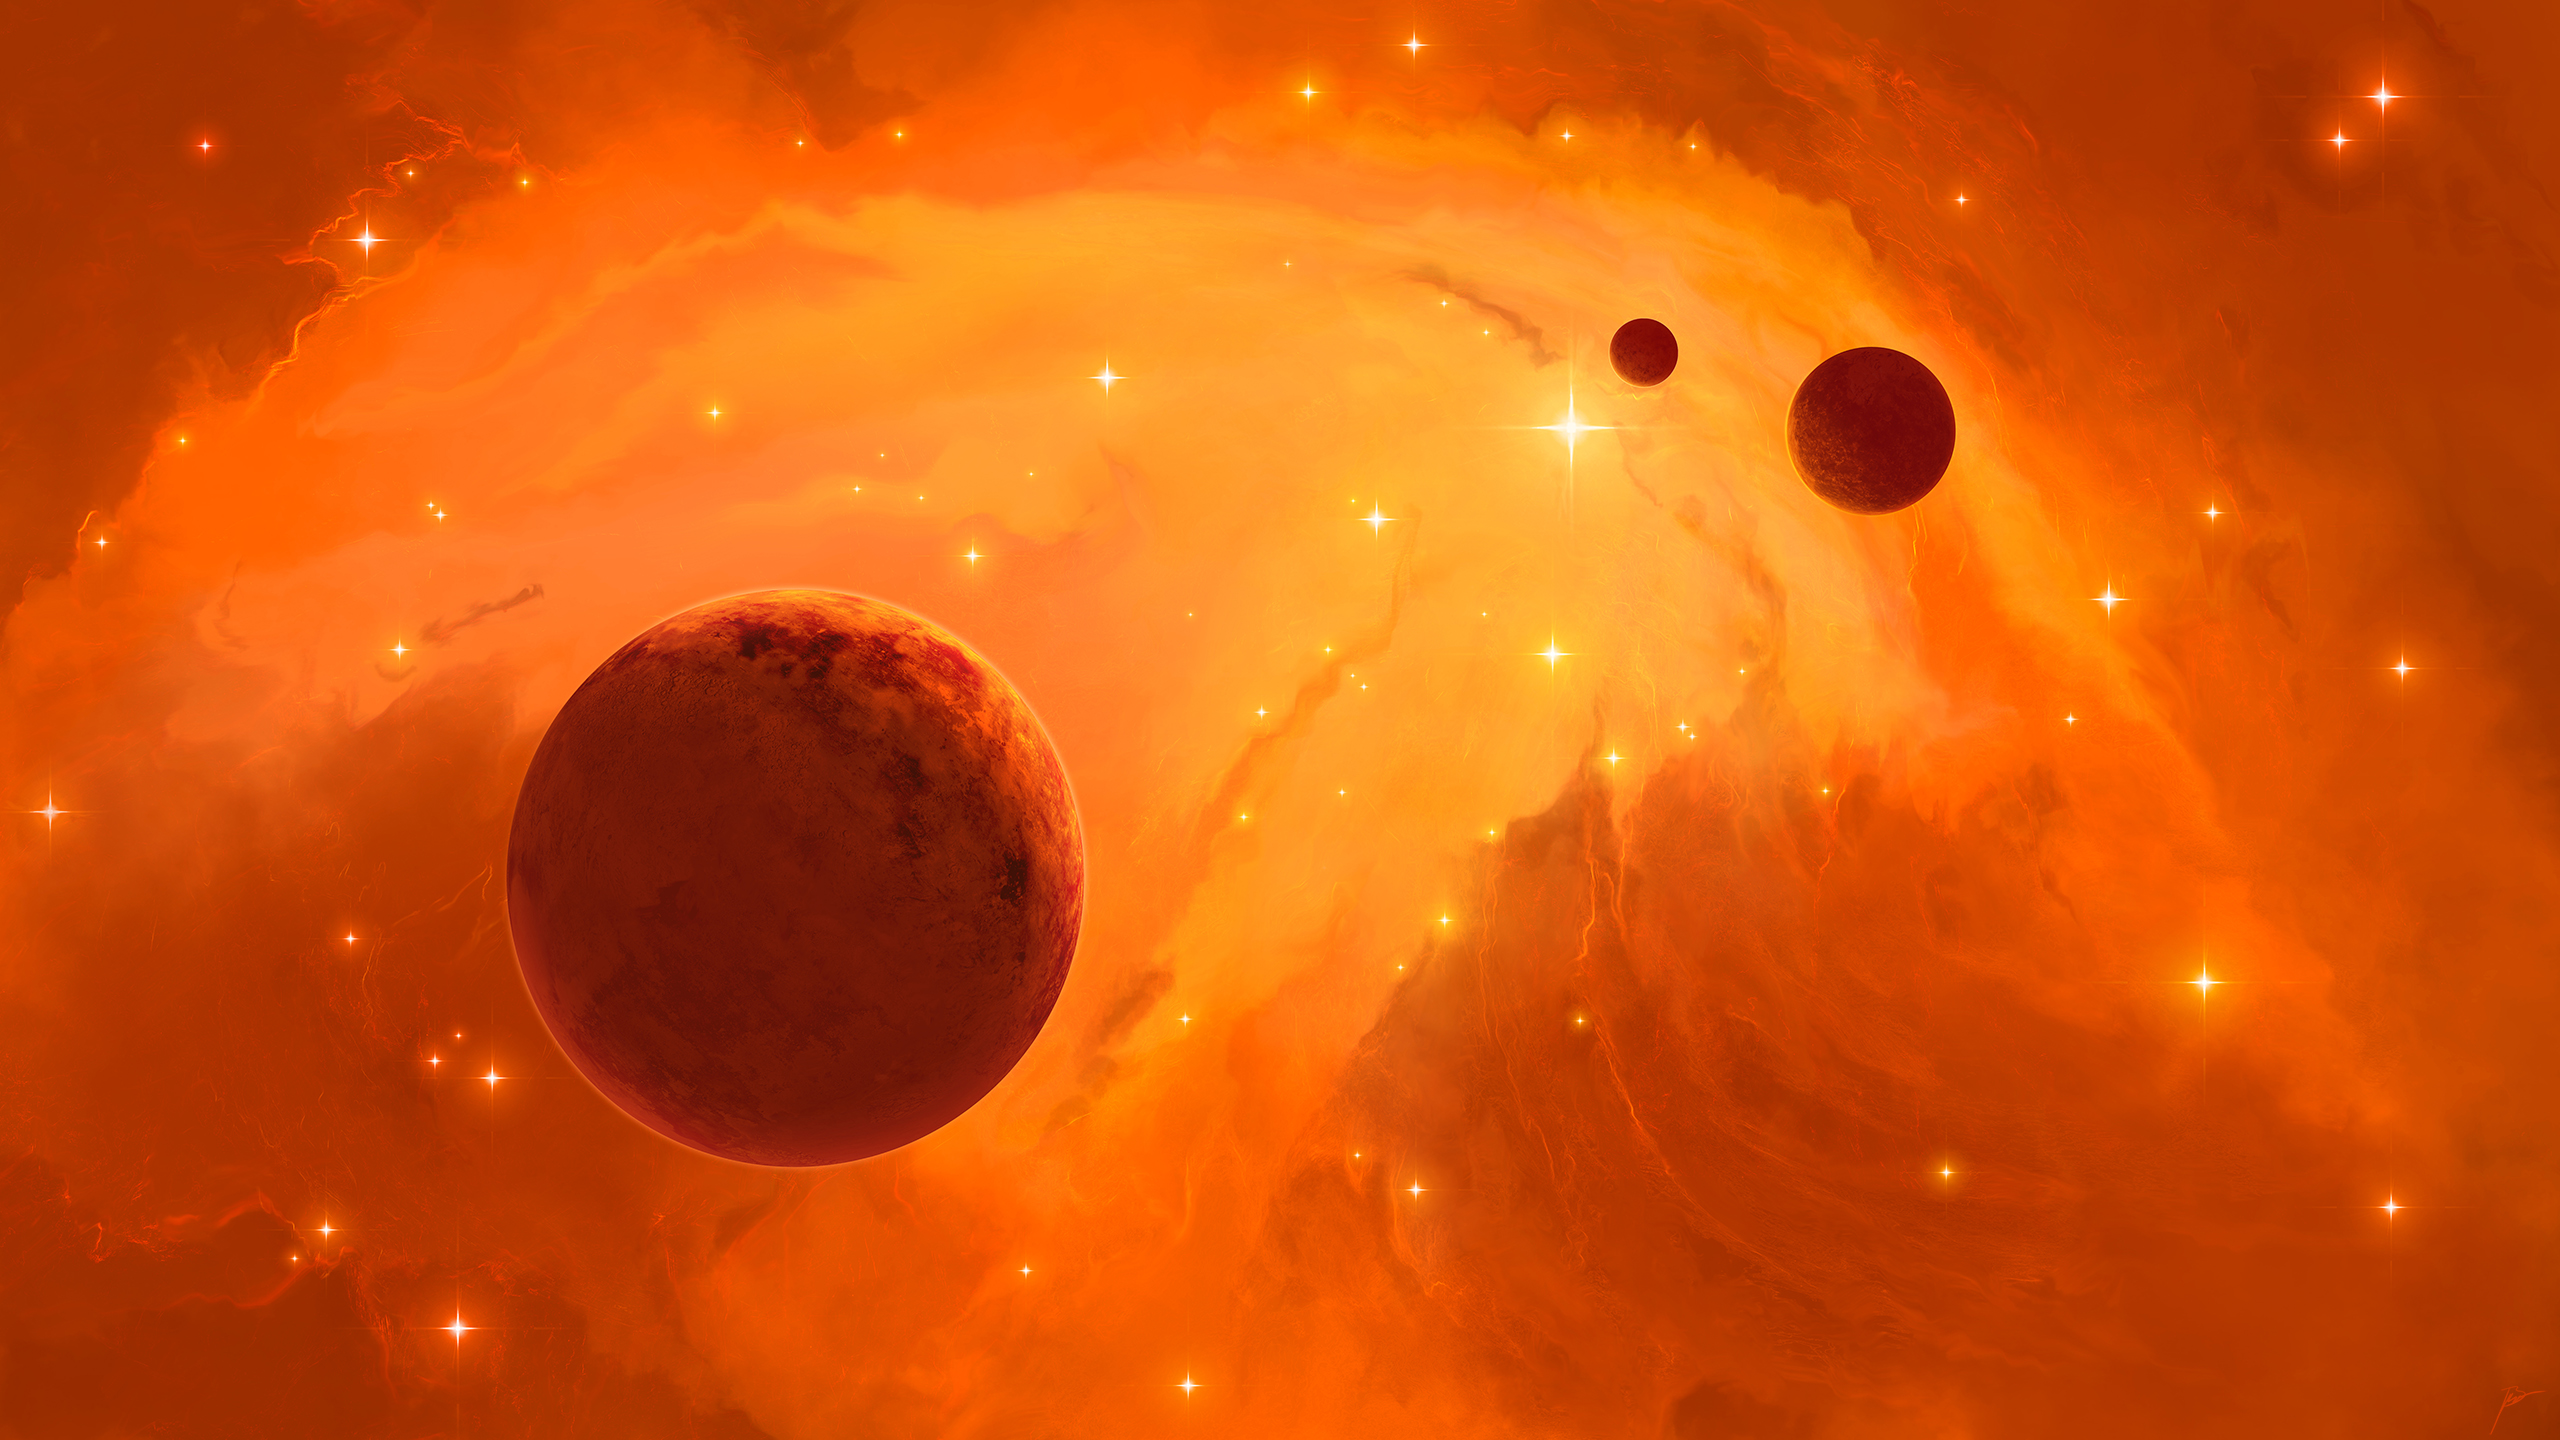 General 2560x1440 space art JoeyJazz nebula stars space orange background orange